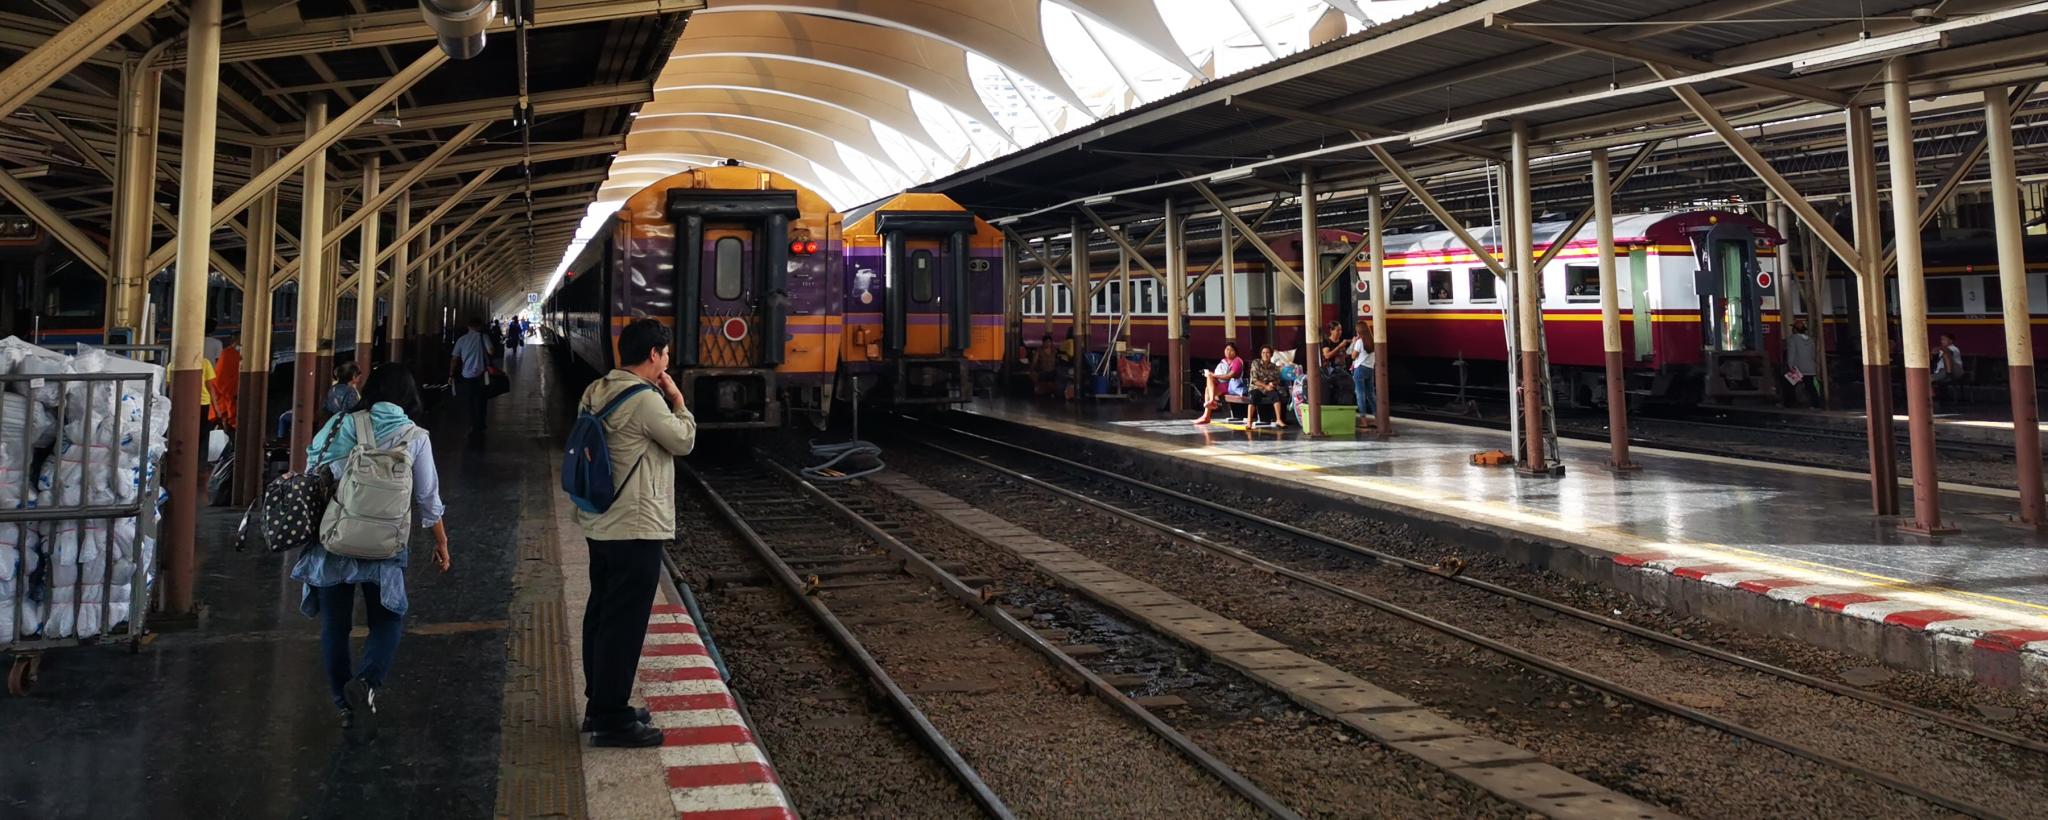 Post a photo you took yourself-bkk-train-jpg